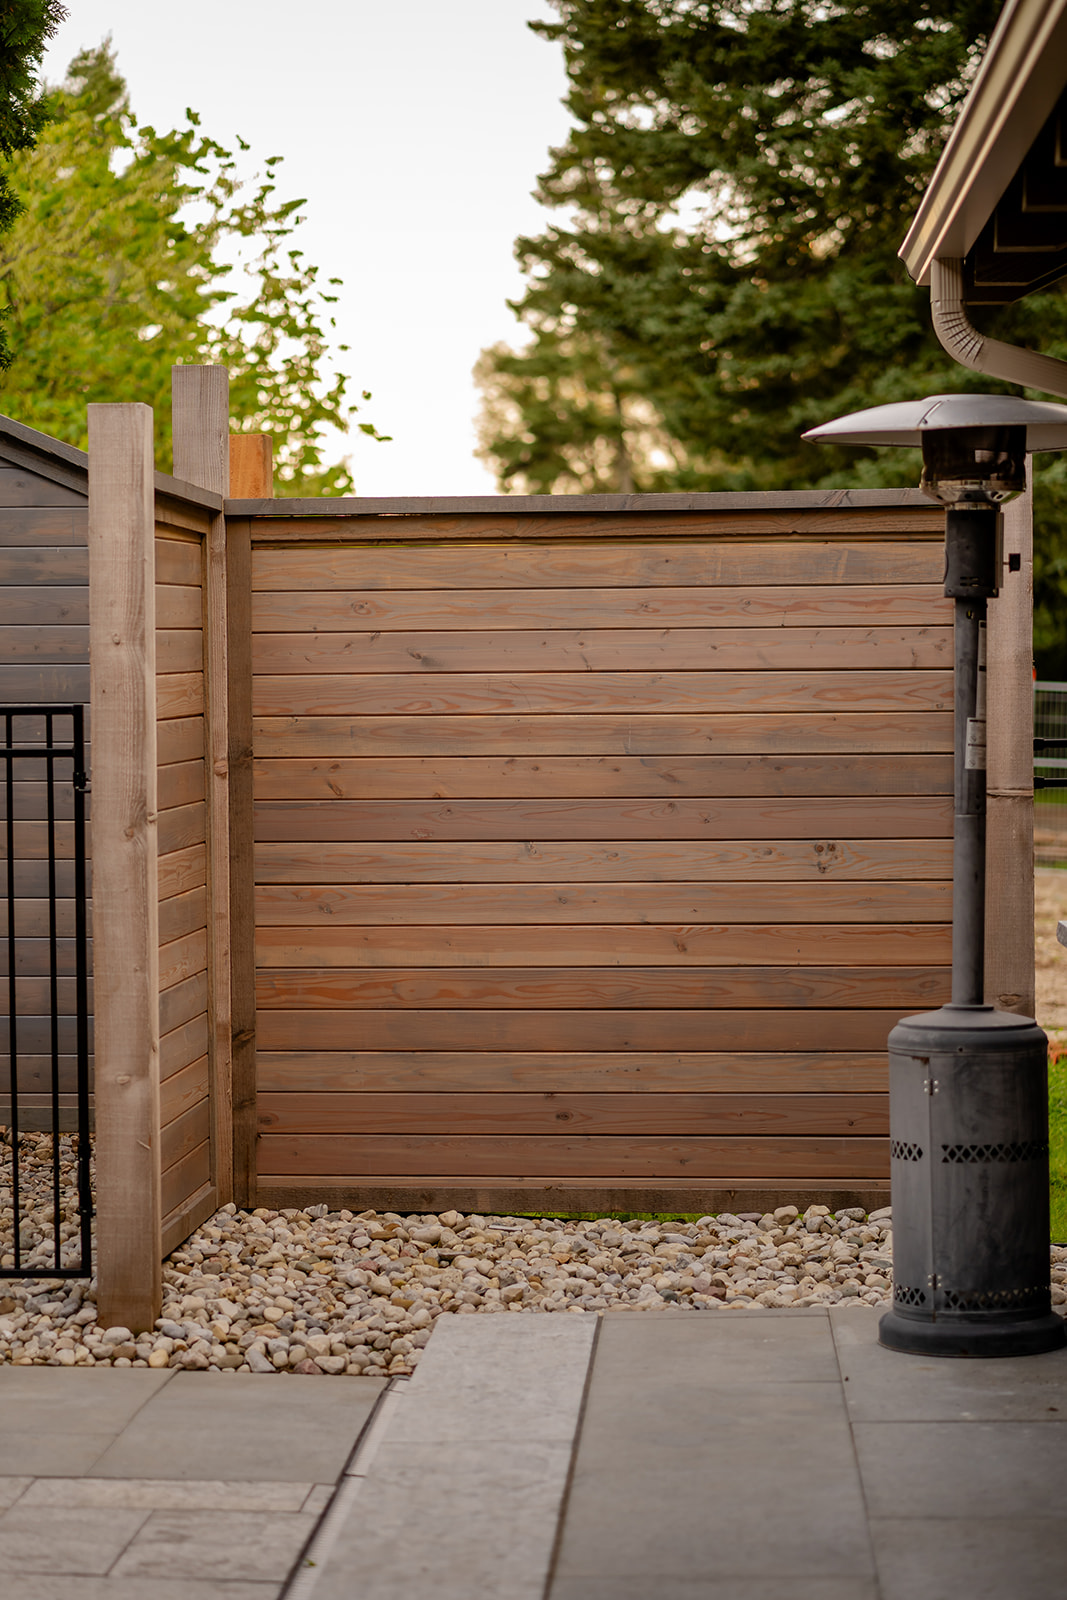 A horizontal wooden fence.